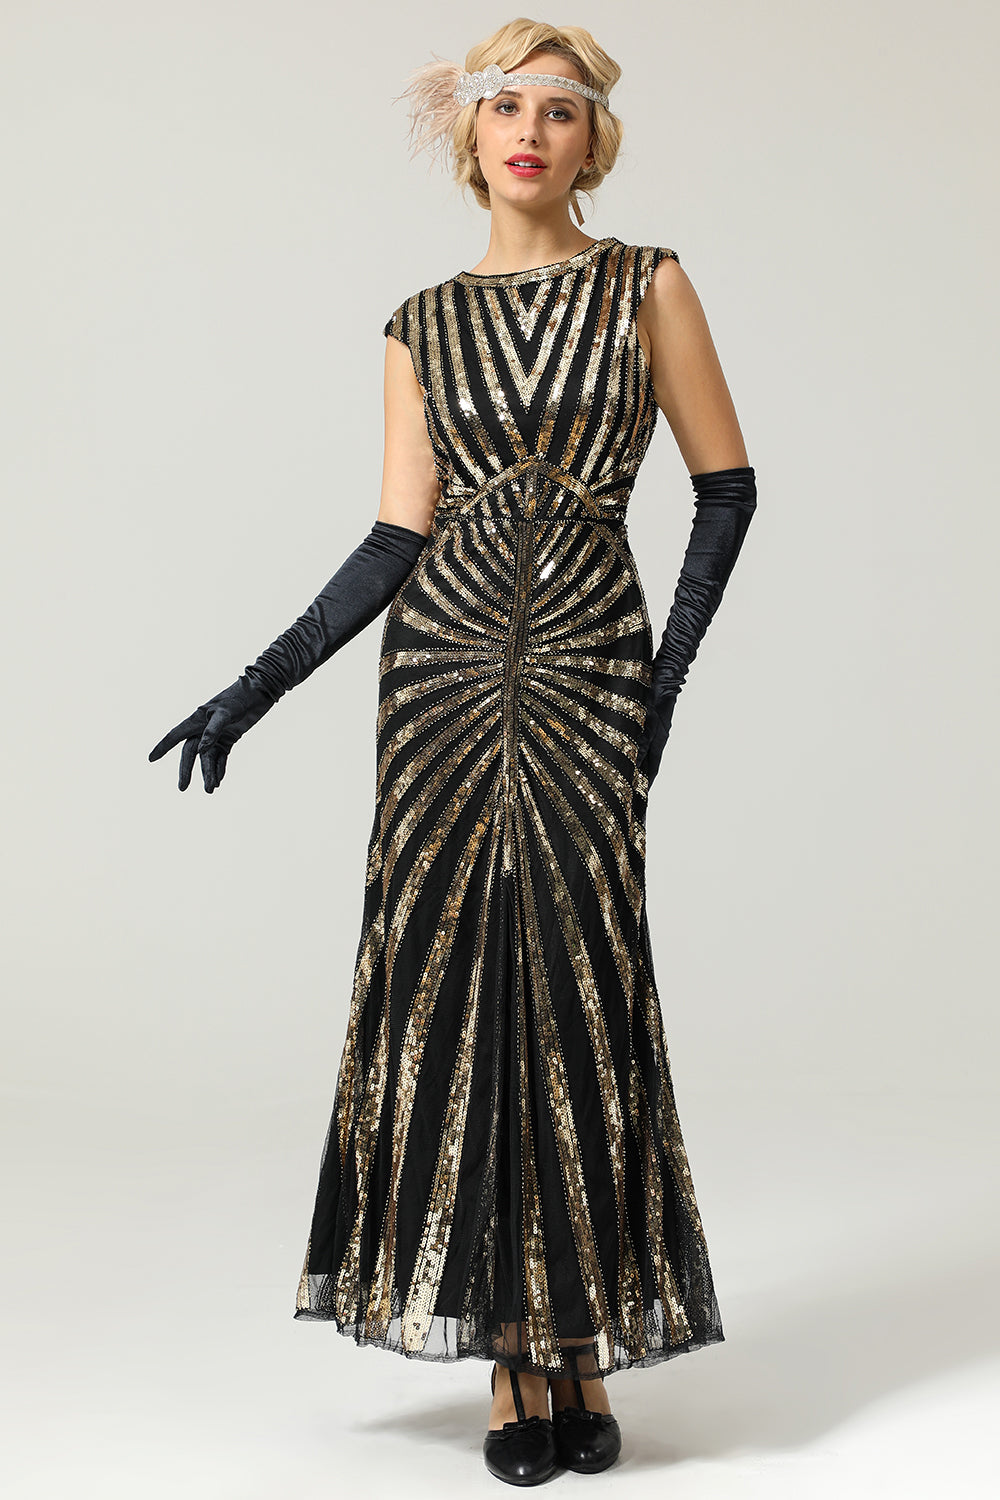 Mermaid 1920s Sequined Flapper Dress